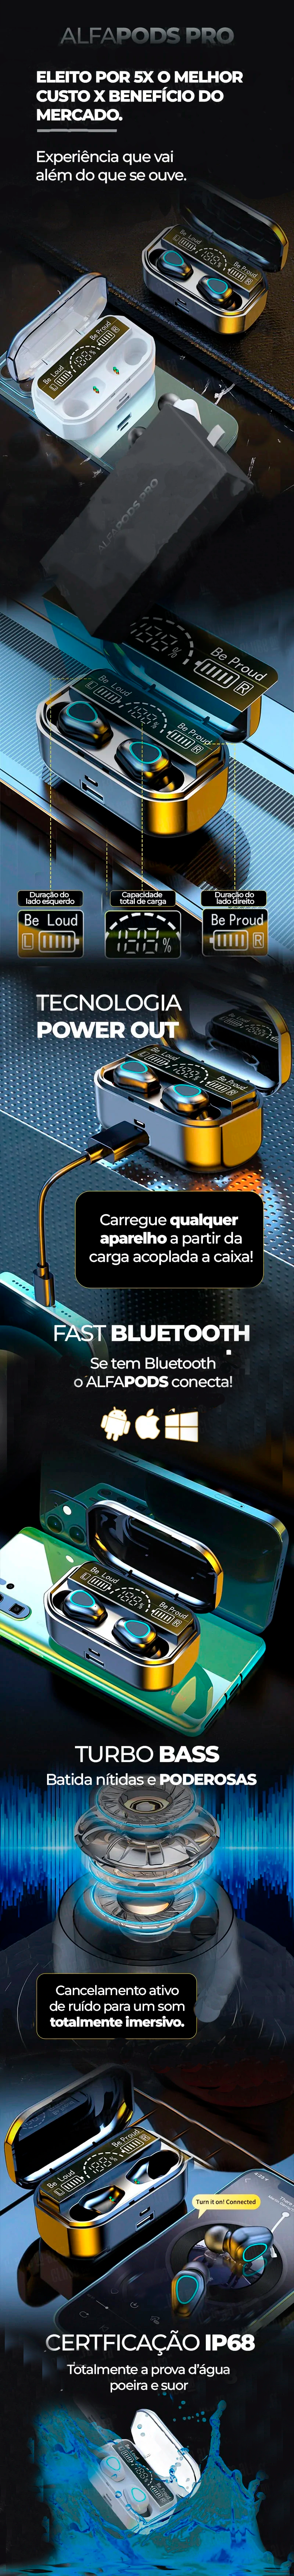 AlfaPods Pro Fone Bluetooth à Prova D'água 5.0